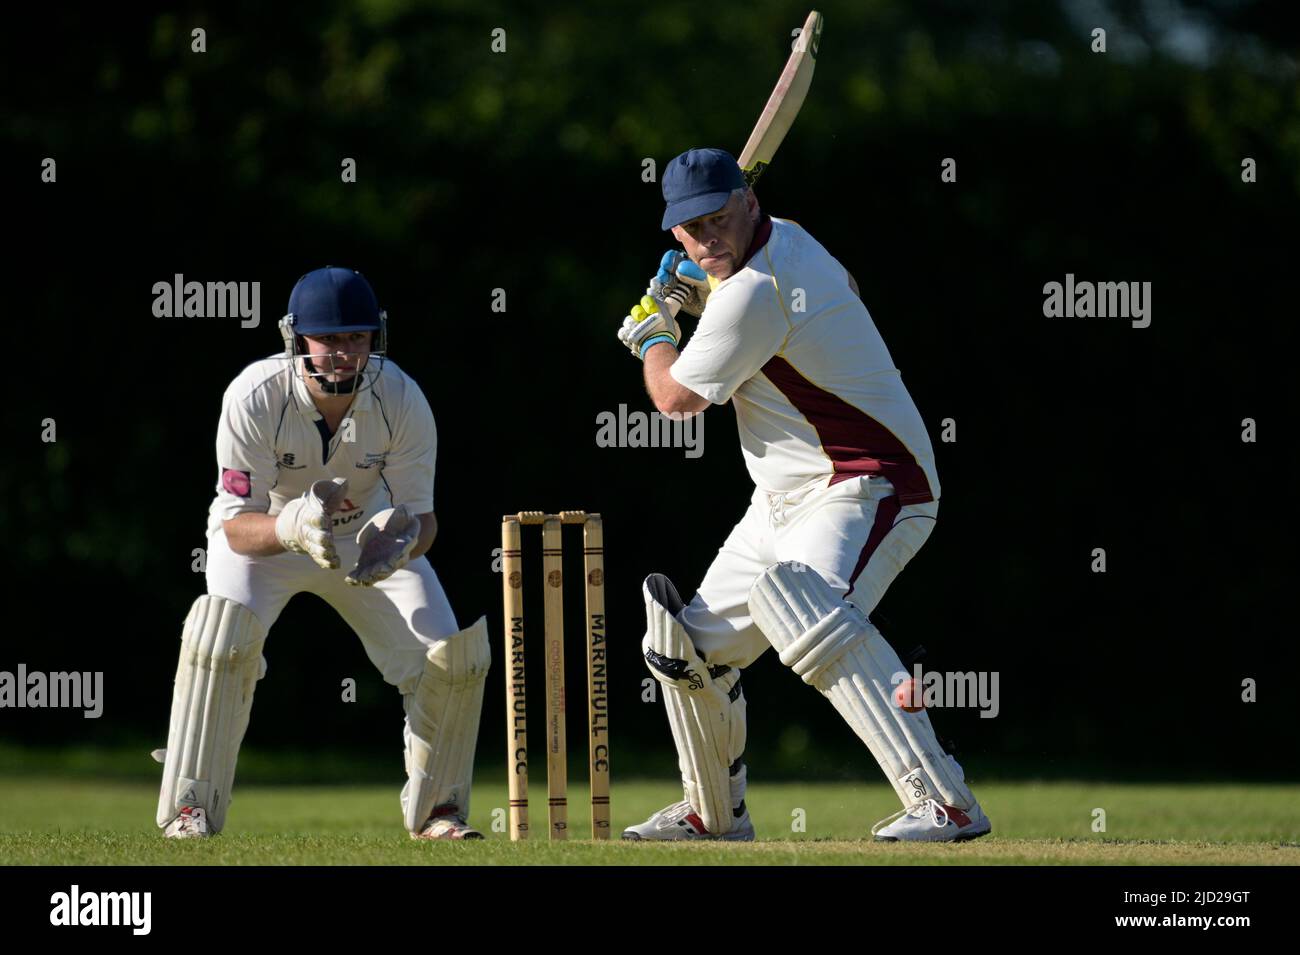 Cricket batsman in action. Stock Photo